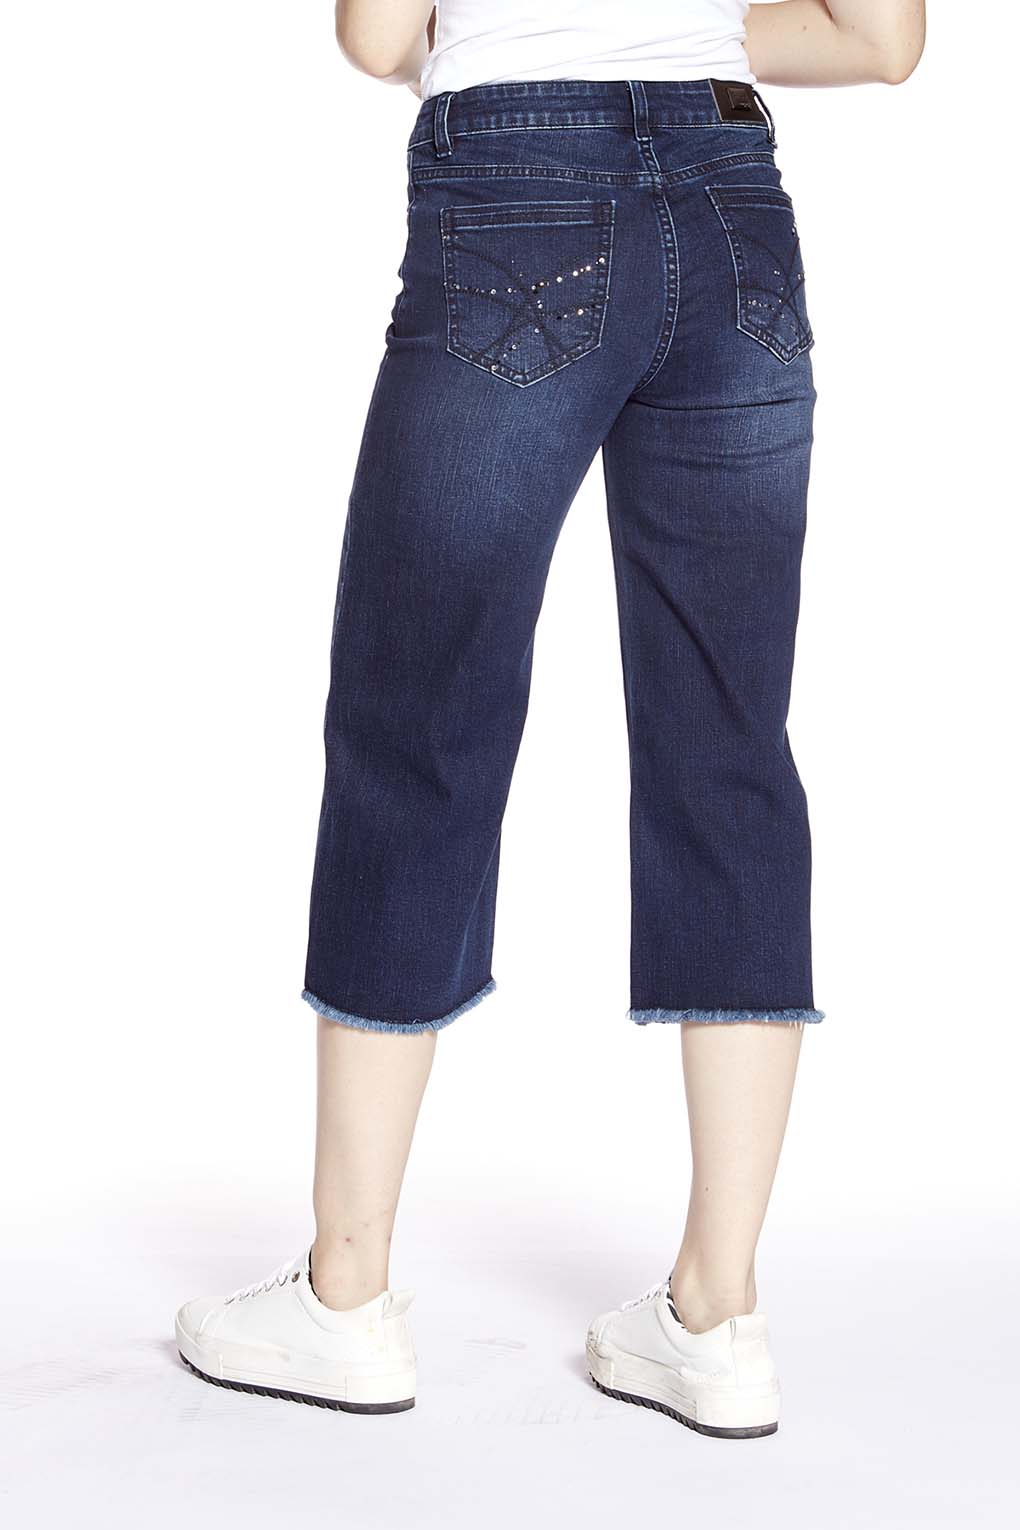 MEGHAN - Ladies 5 Pocket Wide Leg Cropped Pant - Dark Indigo Rinse - DENIM SOCIETY™